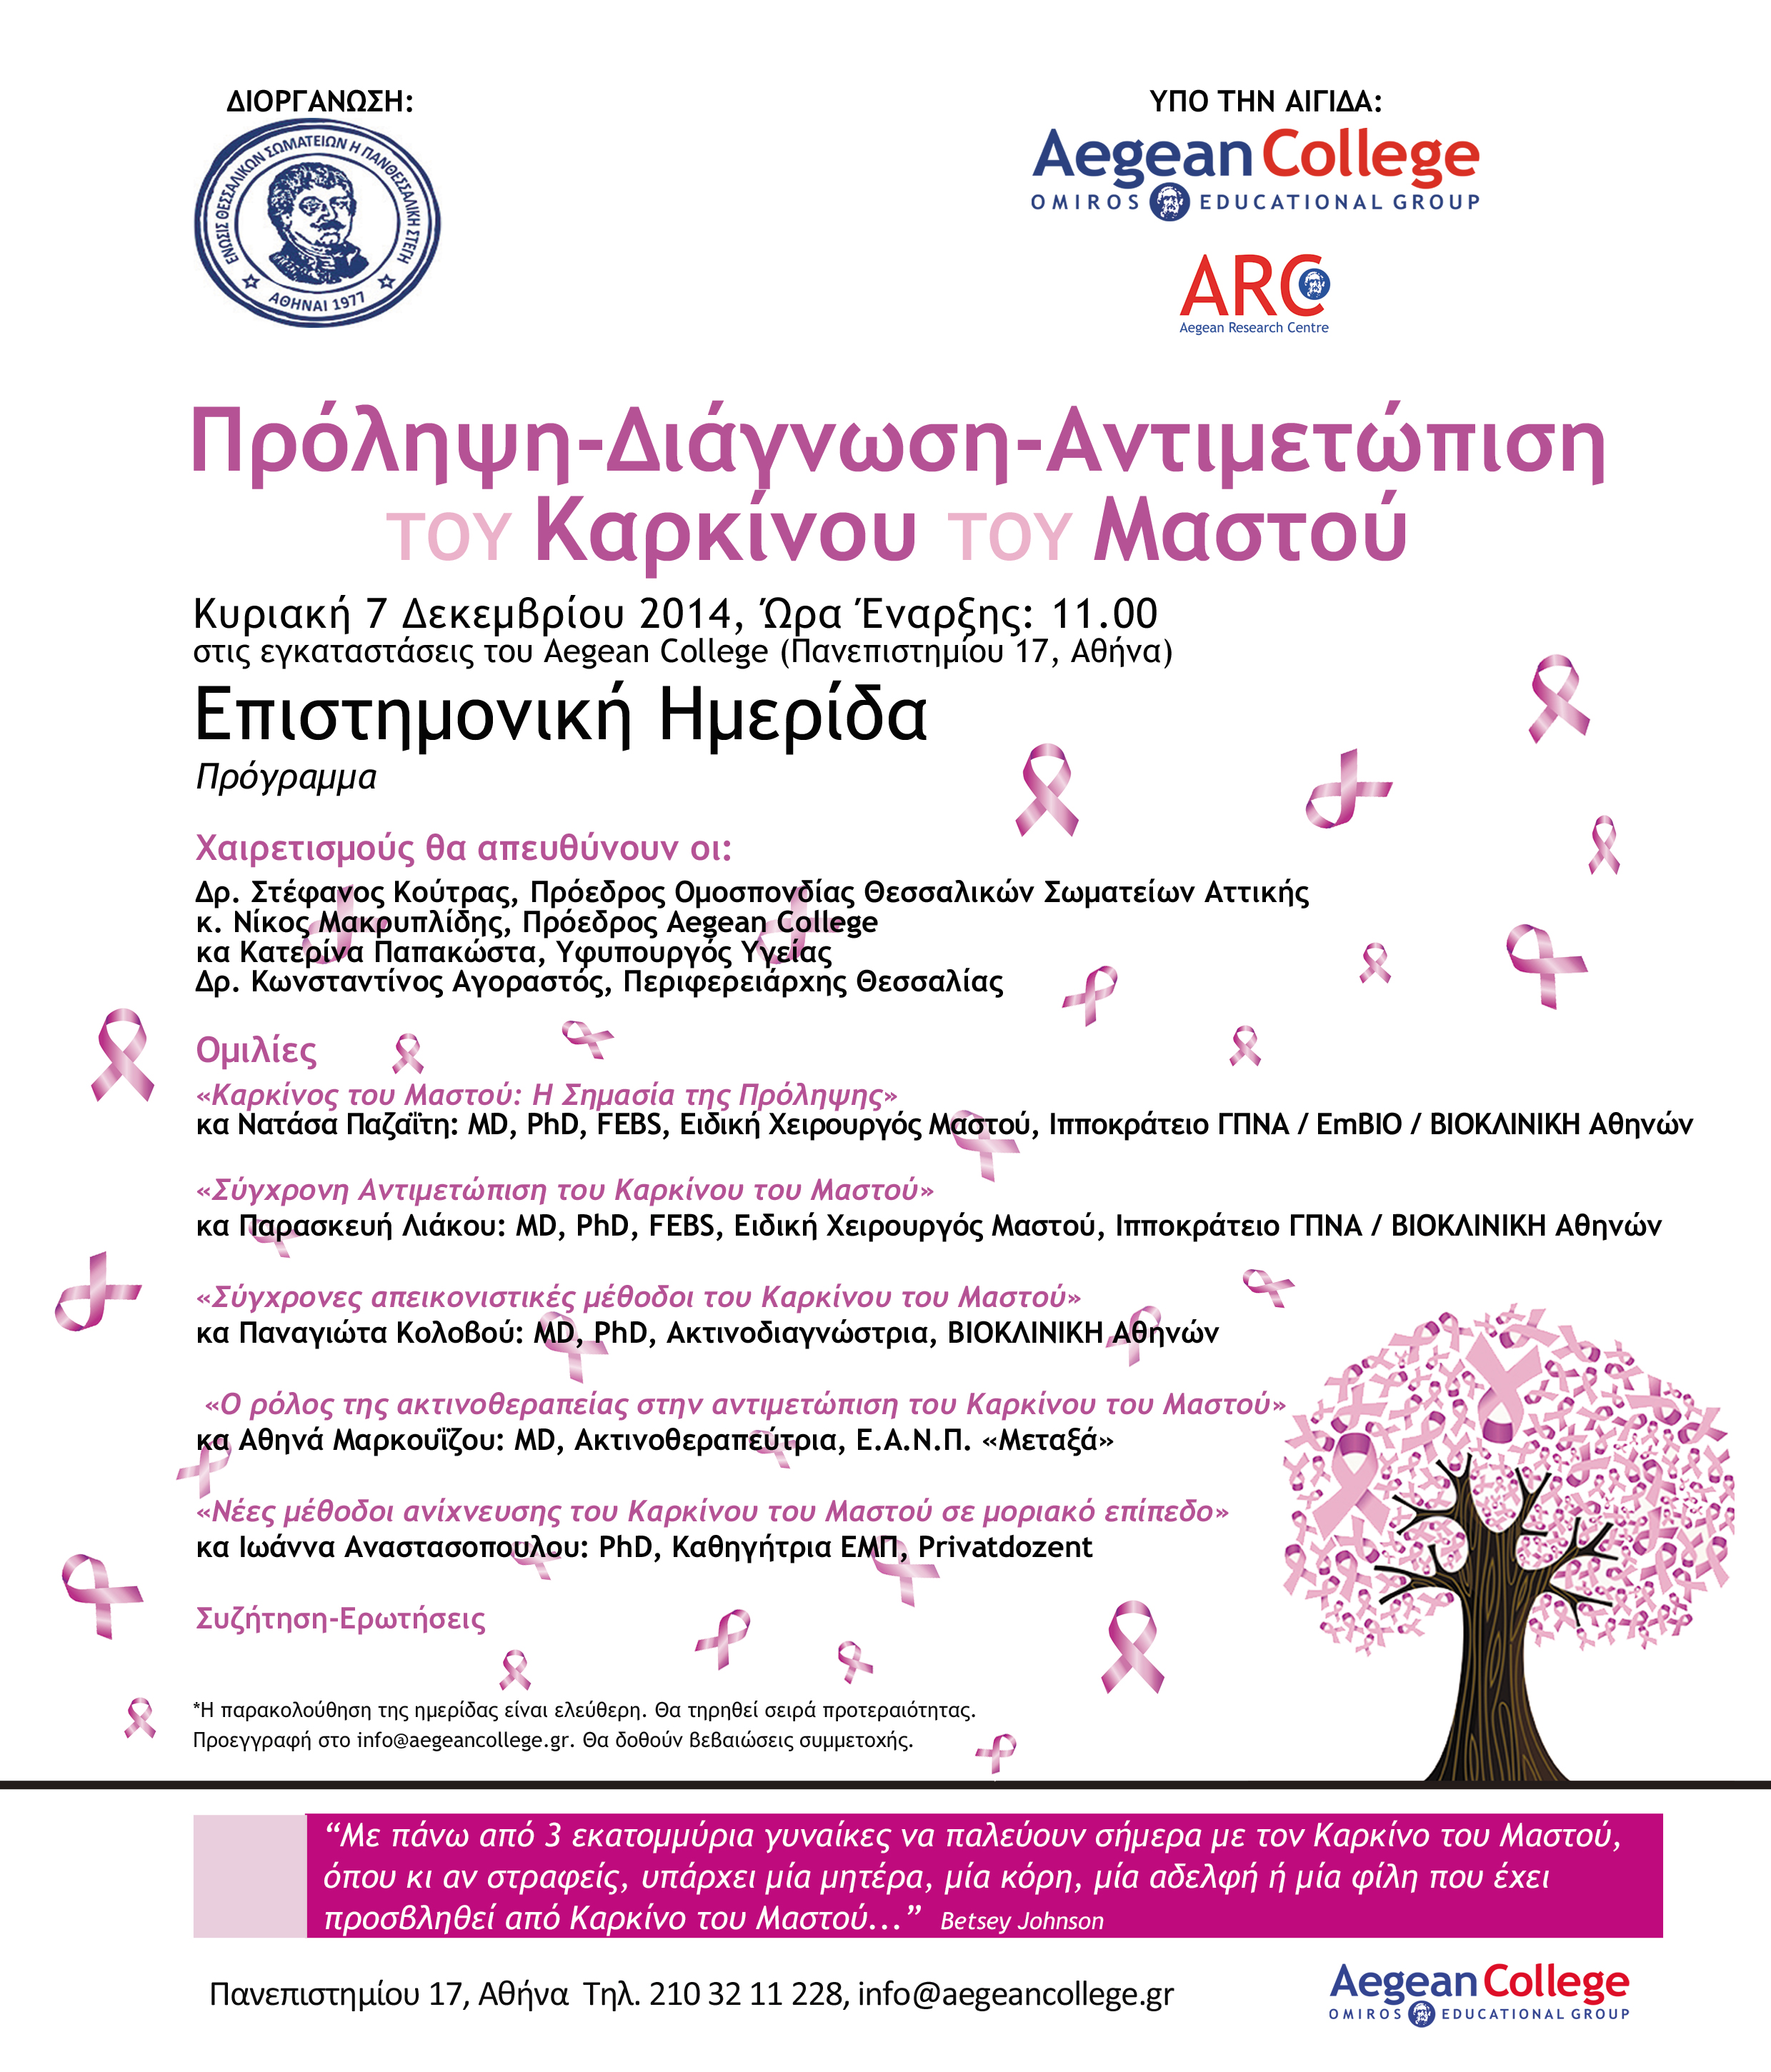 AEGEAN COLLEGE: ΗΜΕΡΙΔΑ – Πρόληψη – Διάγνωση – Αντιμετώπιση του Καρκίνου του Μαστού